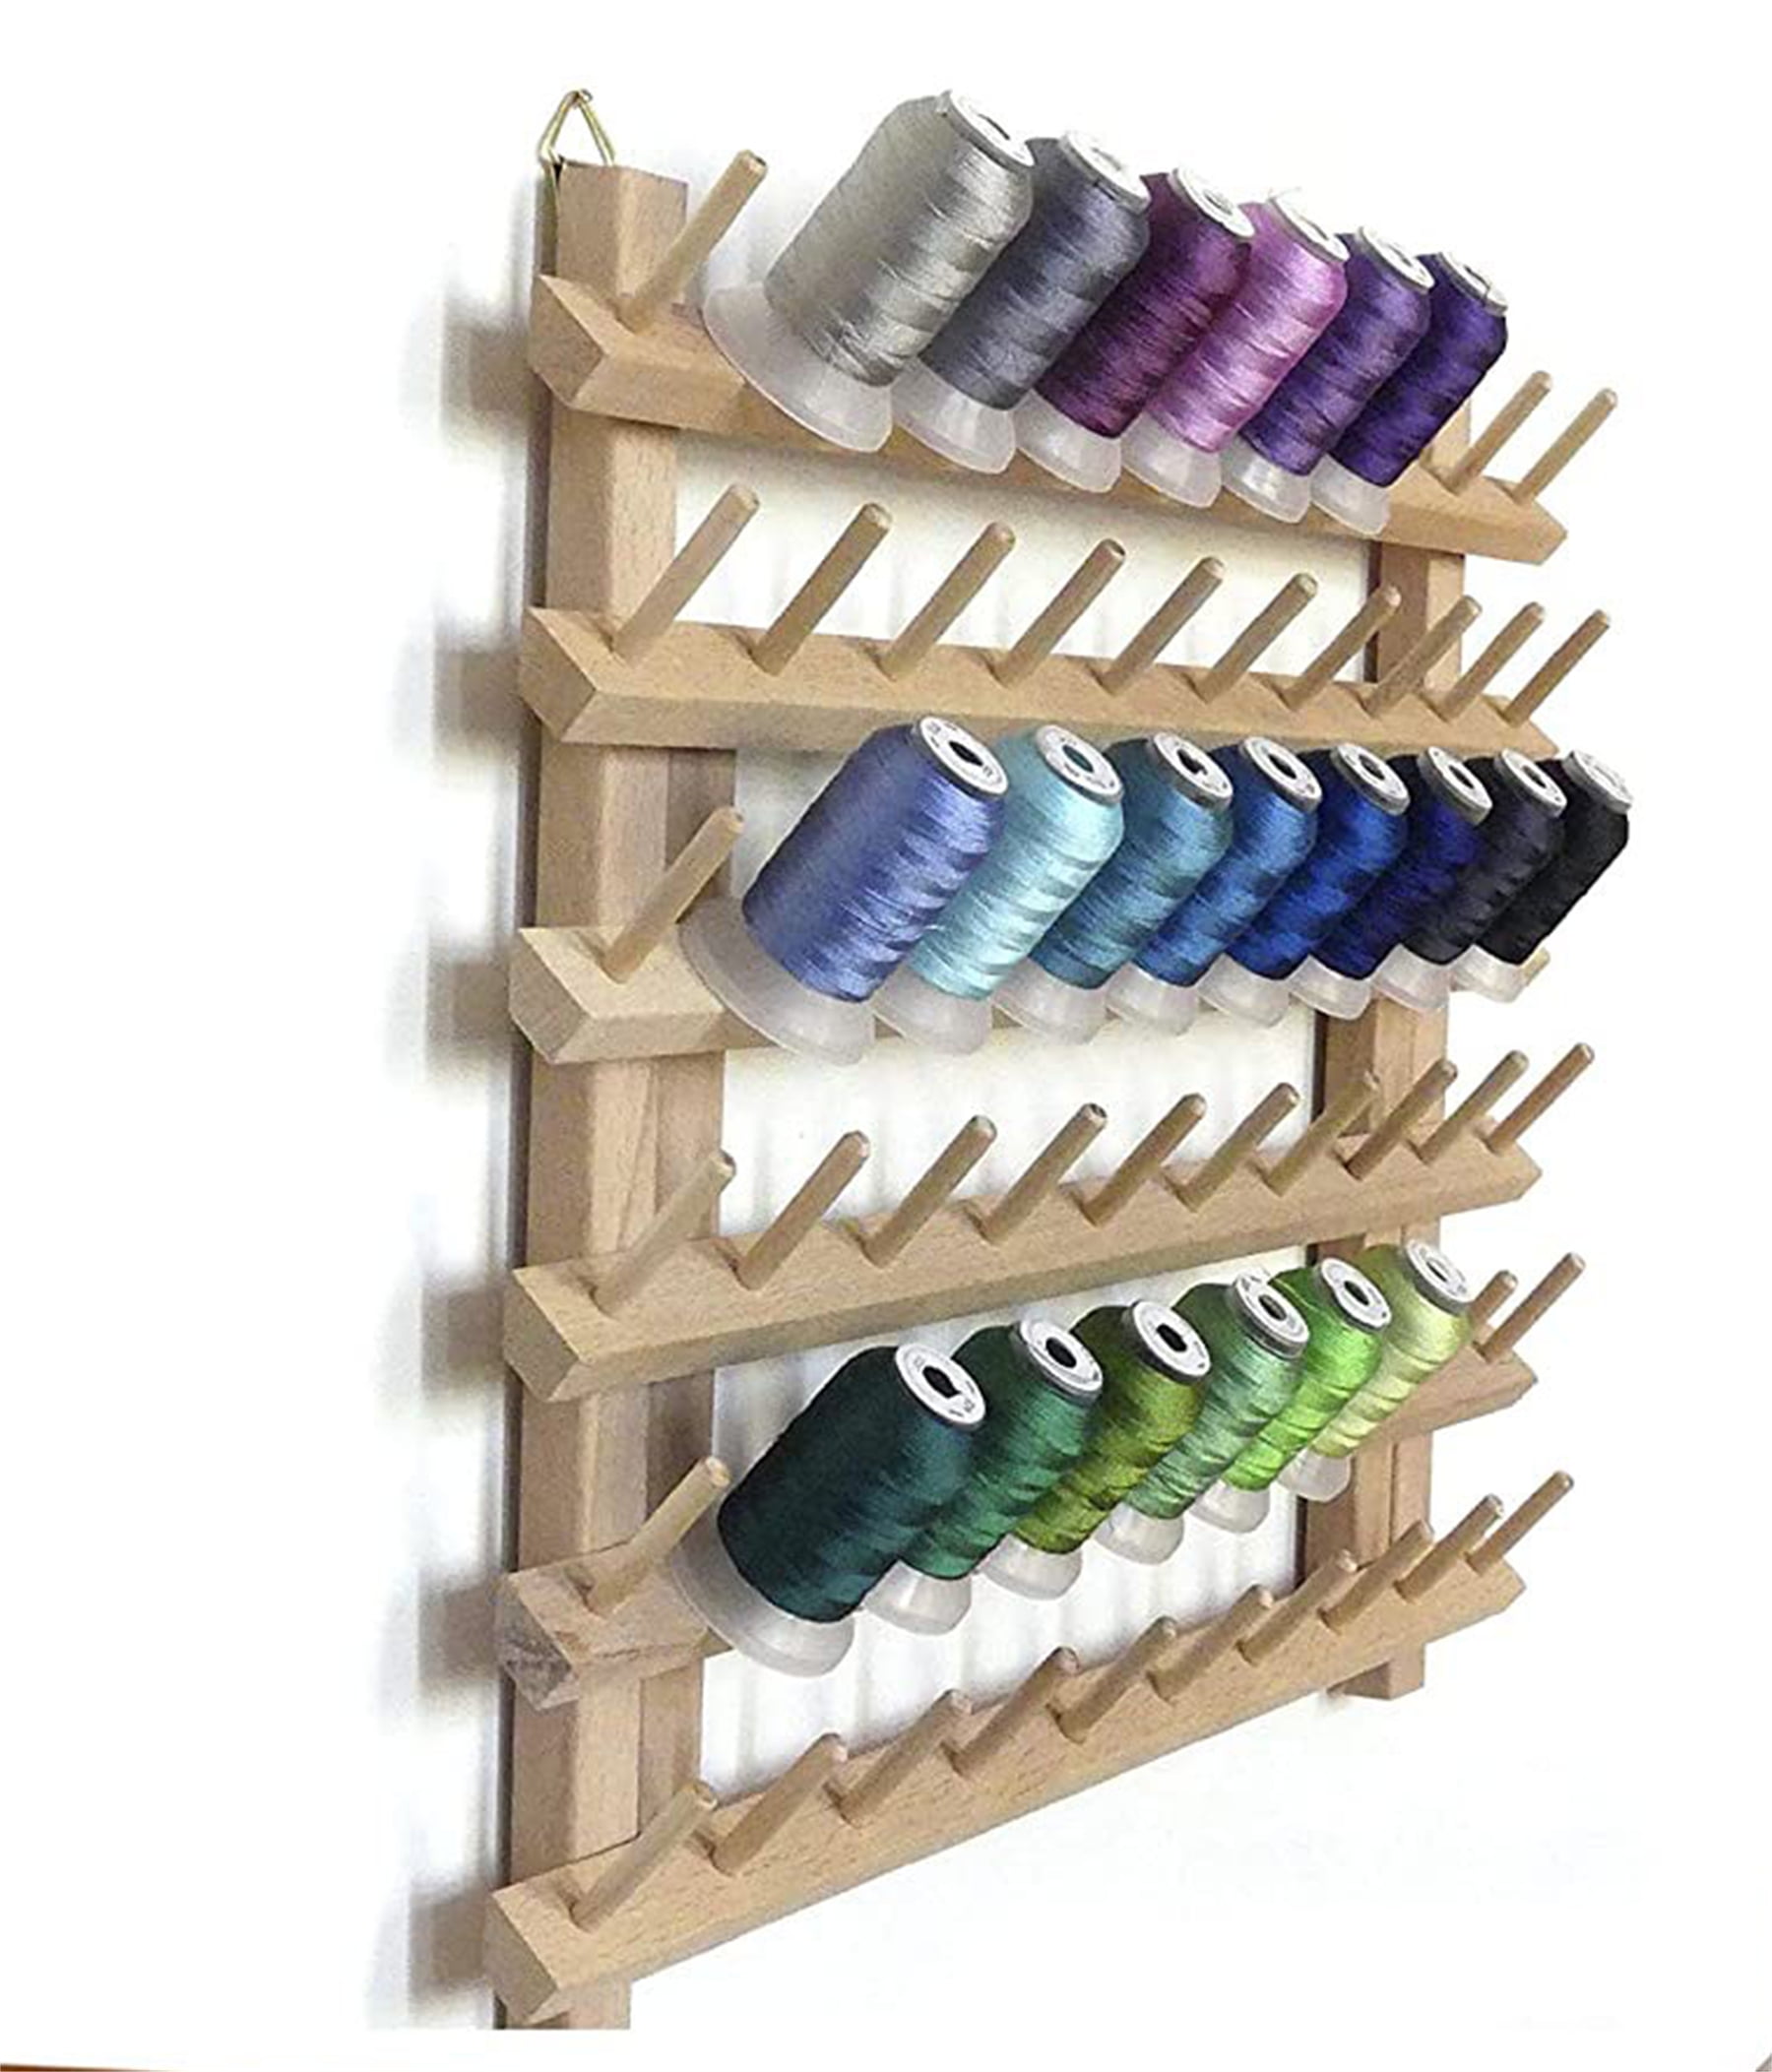 Hello Hobby Sewing Thread Spool Organizing Storage Rack, Holds 60 Spools, Size: 15.75 inch x 1.5 inch x 12.625 inch